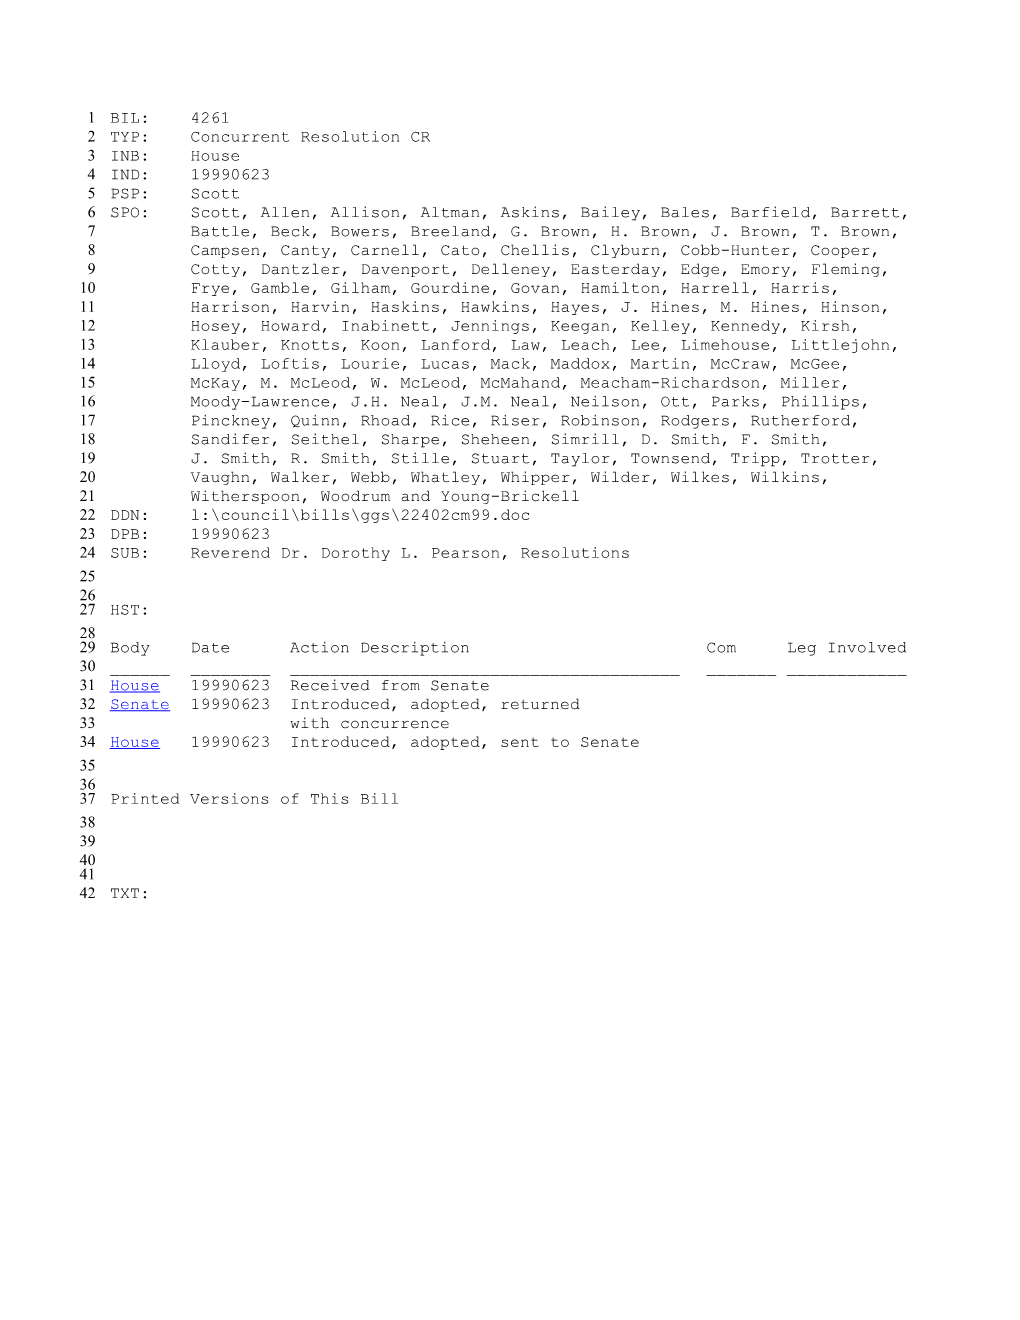 1999-2000 Bill 4261: Reverend Dr. Dorothy L. Pearson, Resolutions - South Carolina Legislature